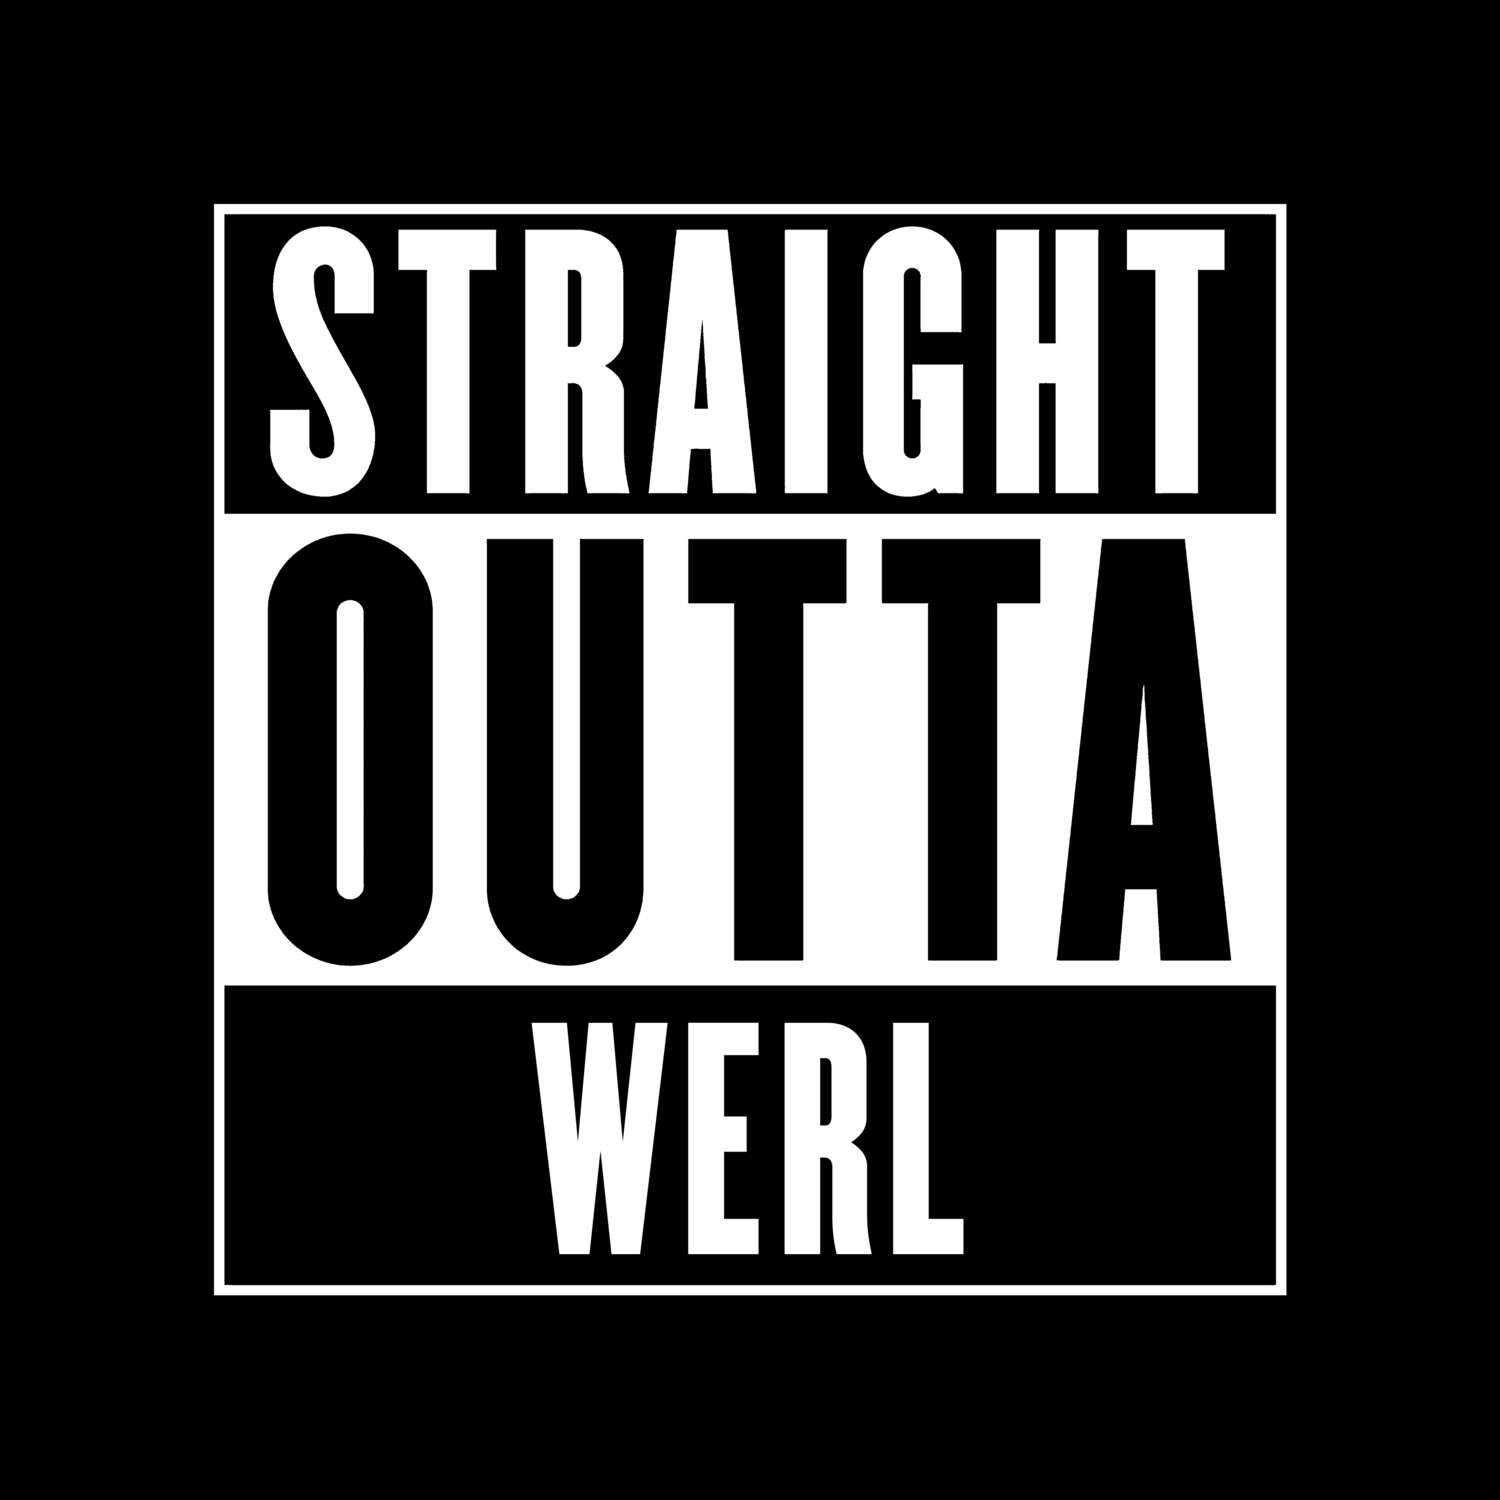 Werl T-Shirt »Straight Outta«